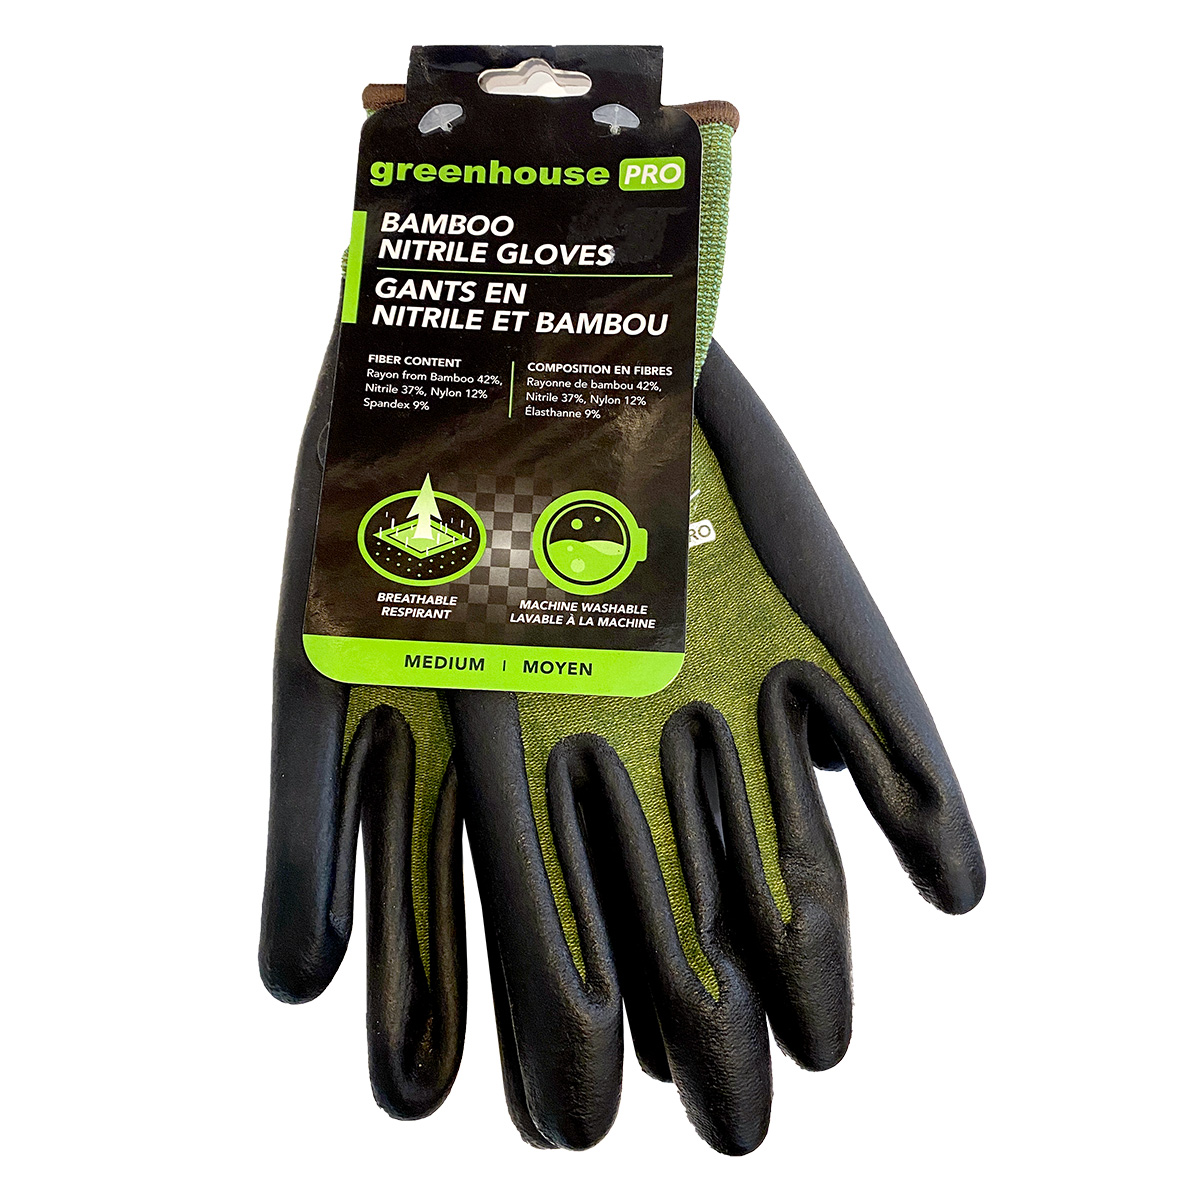 GREENHOUSE PRO Bamboo Nitrile Gloves MEDIUM